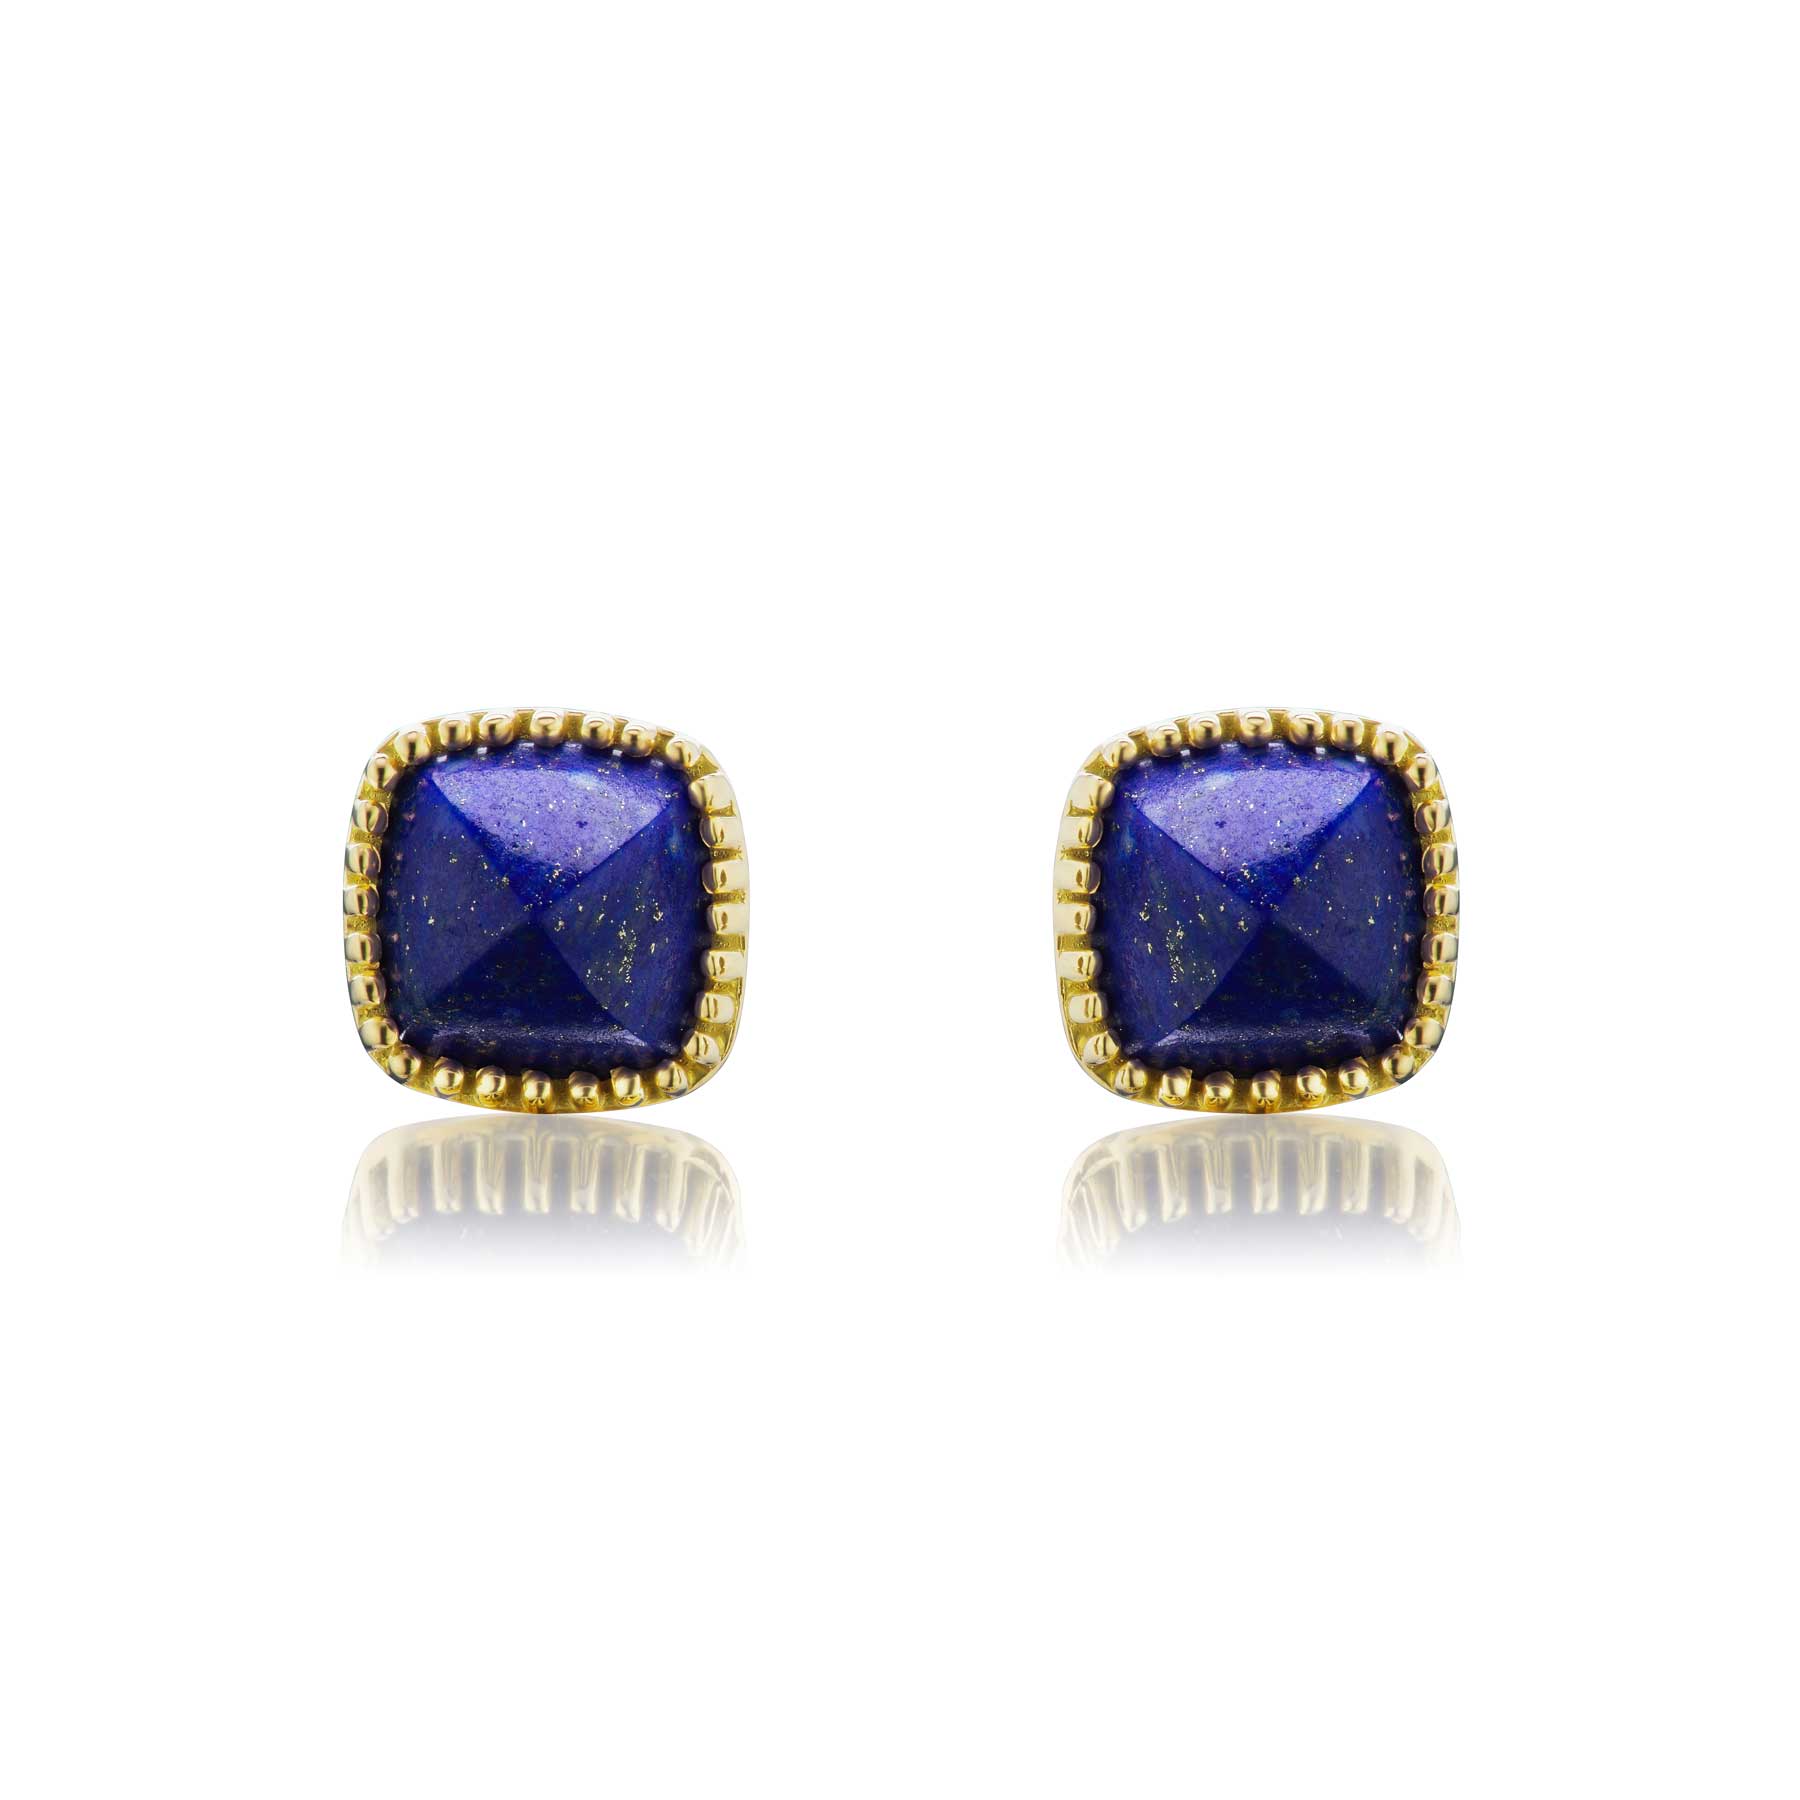 Sugarloaf Stud Earrings with Lapis Lazuli